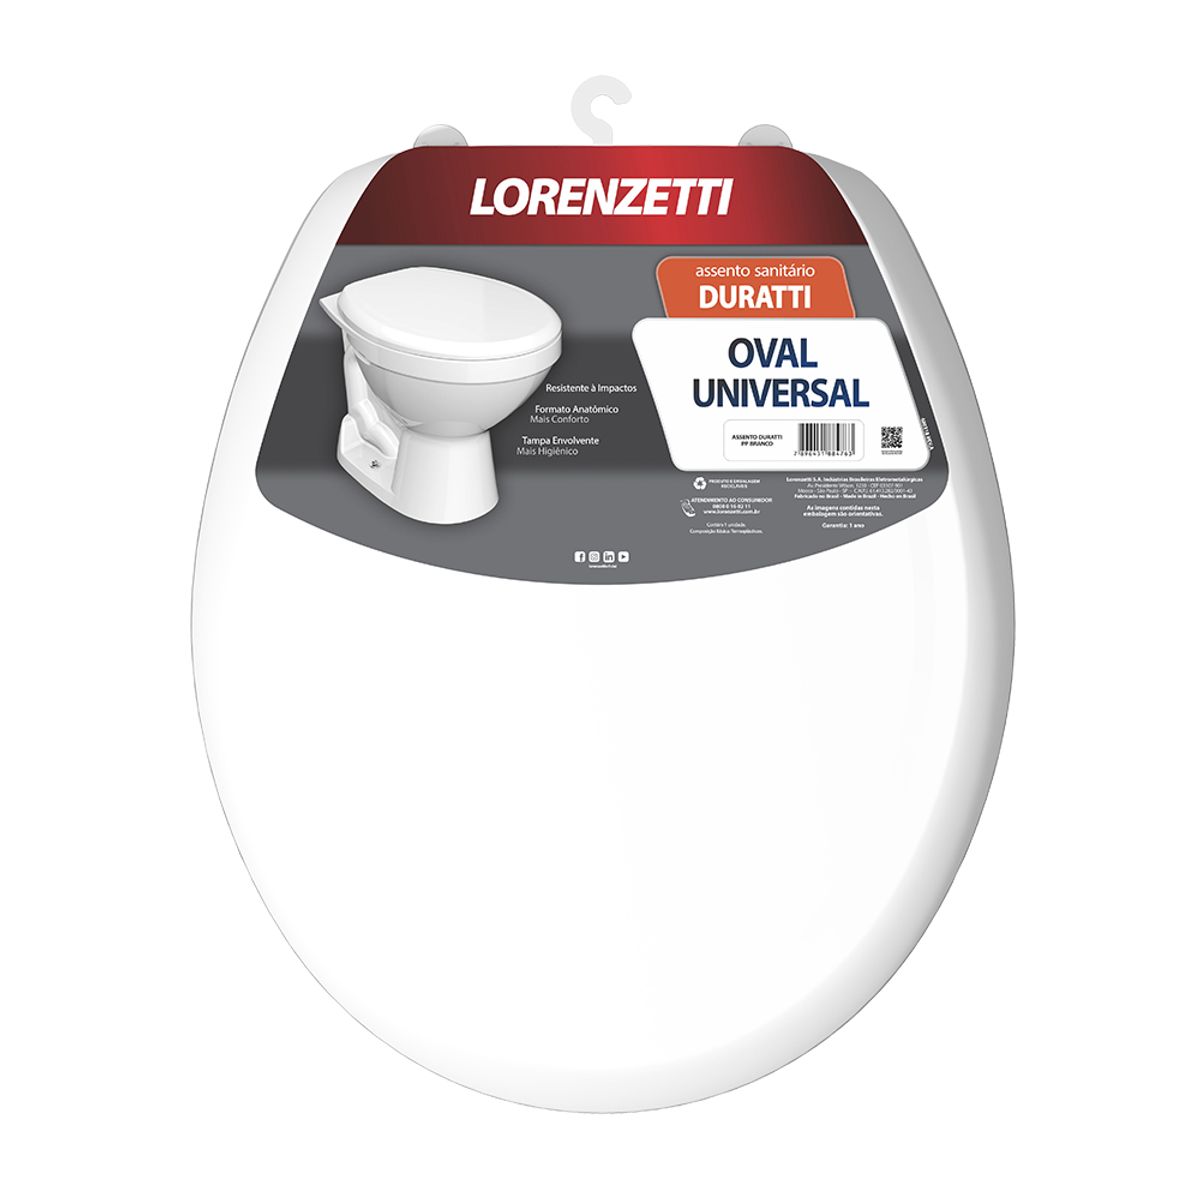 Assento Sanitário Lorenzetti Duratti Oval Universal image number 0